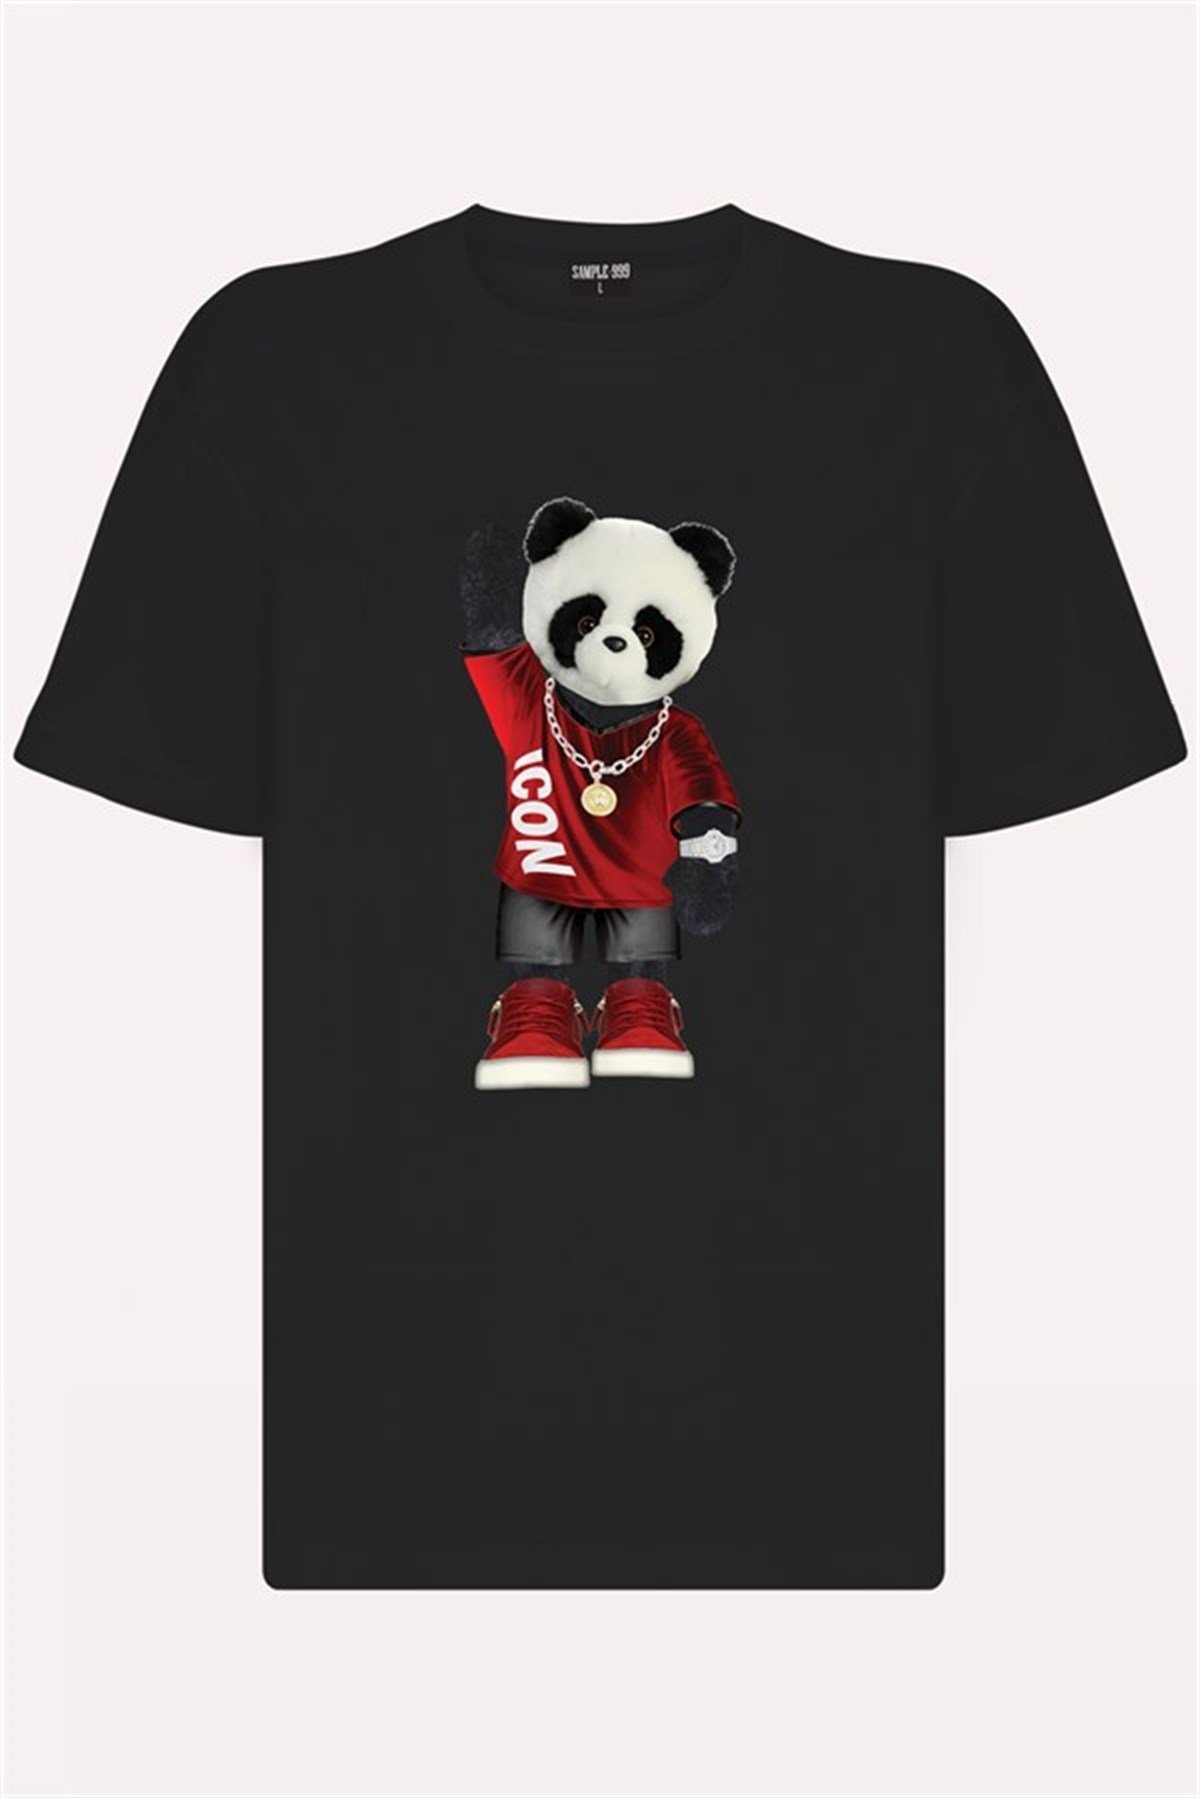 SAMPLE999 Panda Baskılı Tshirt